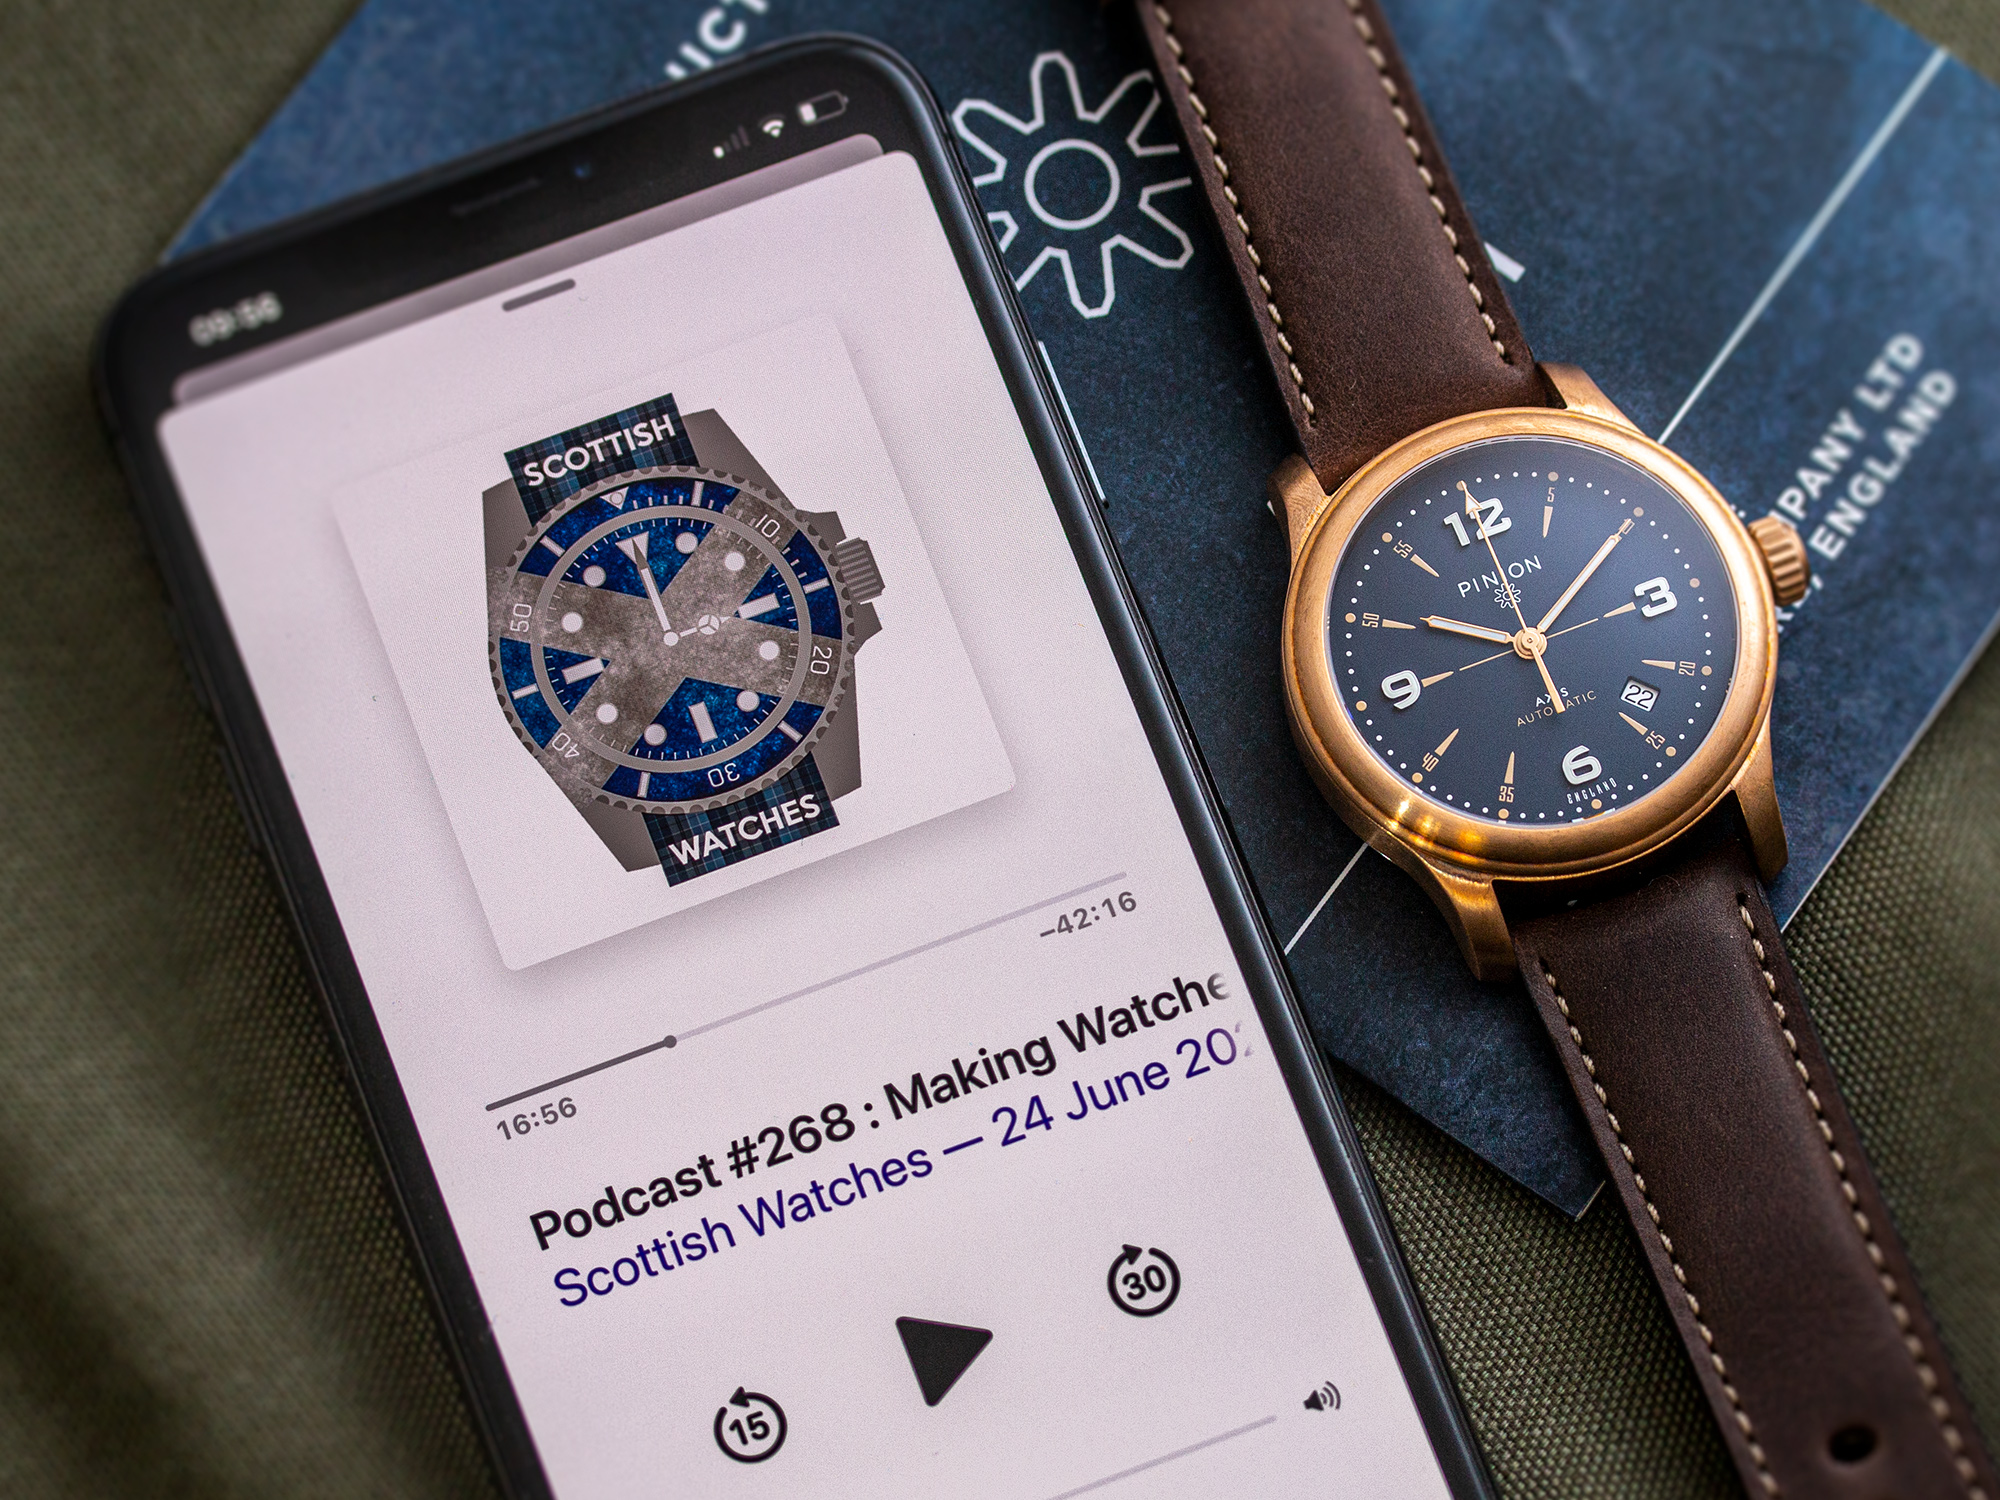 Scottish Watches Podcast with British watch company, Pinion